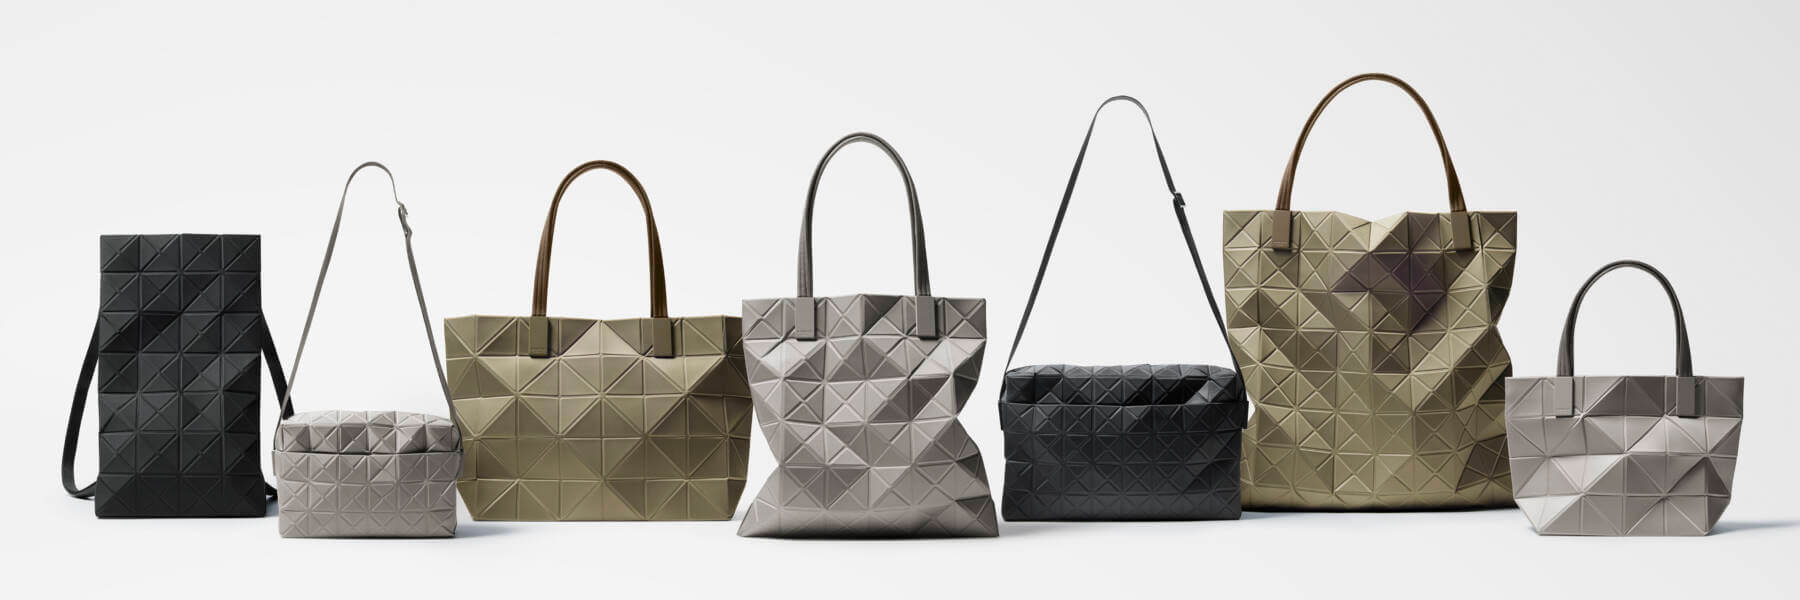 Issey Miyake's Bao Bao bag celebrates 10 years as a design icon, Fashion